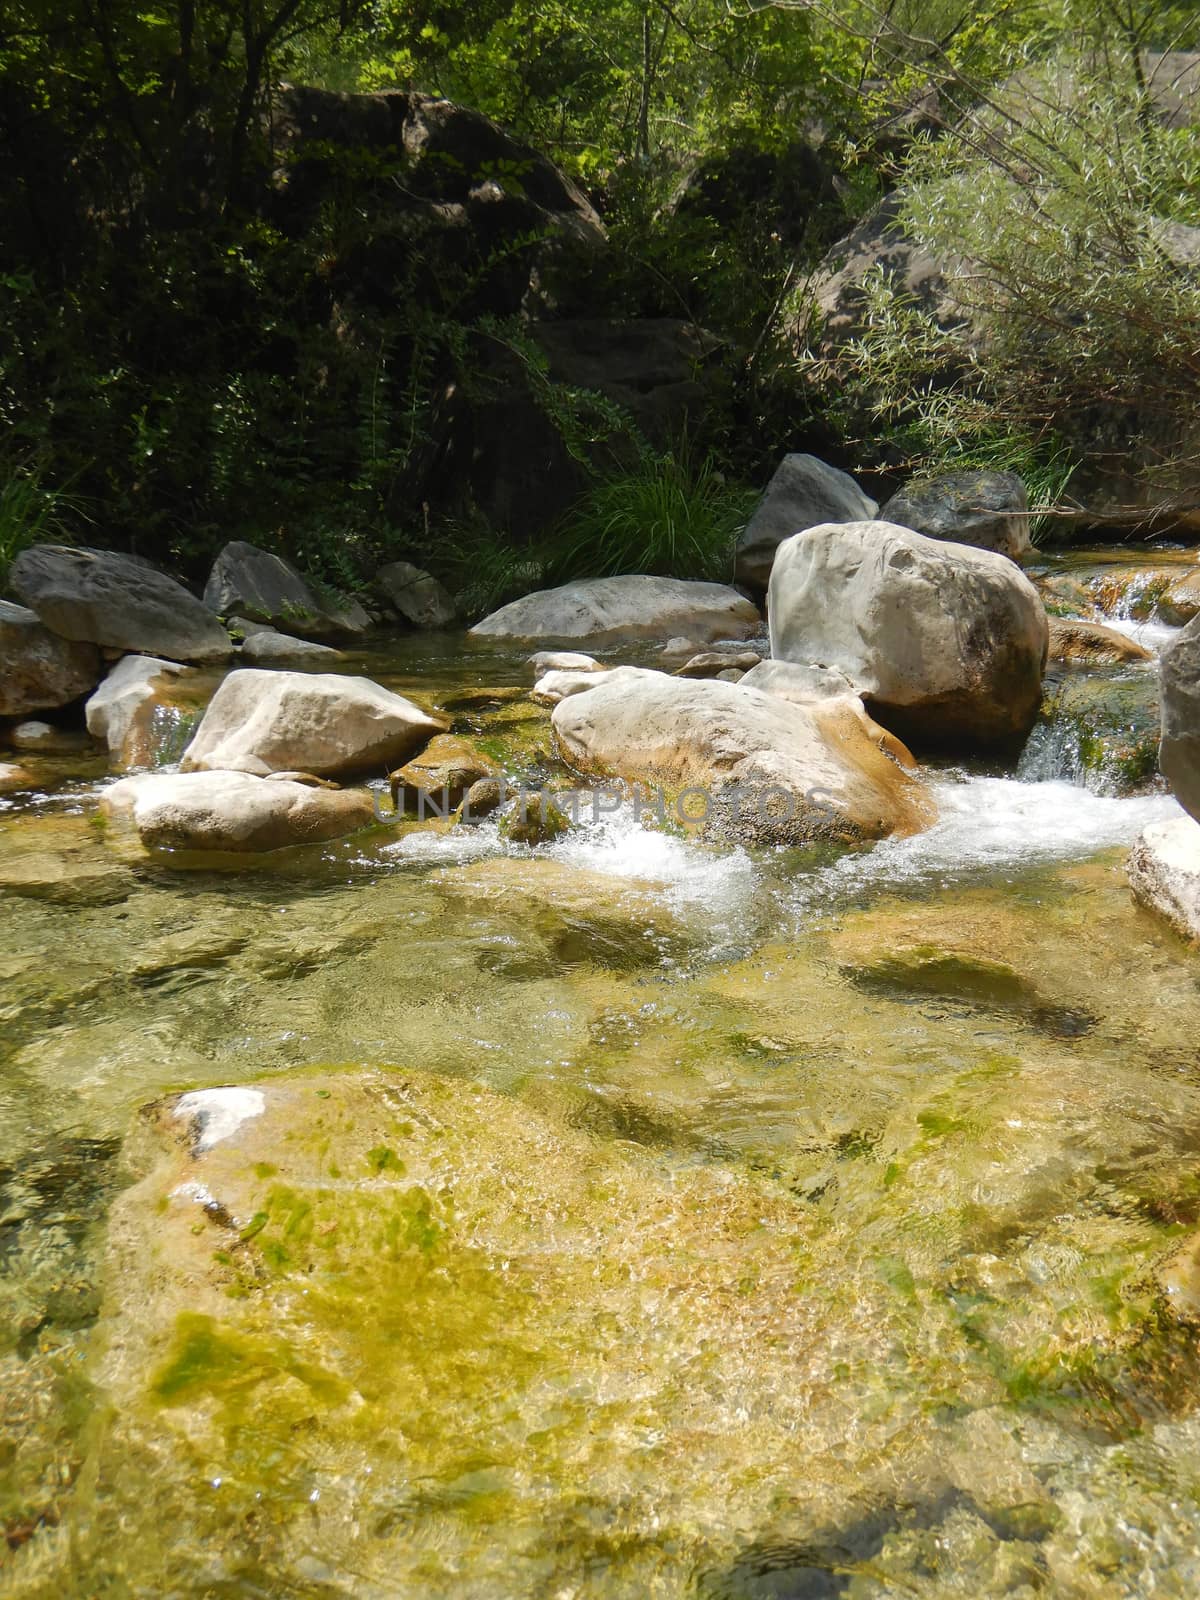 Creek near Rocchetta Nervina, Liguria - Italy by cosca